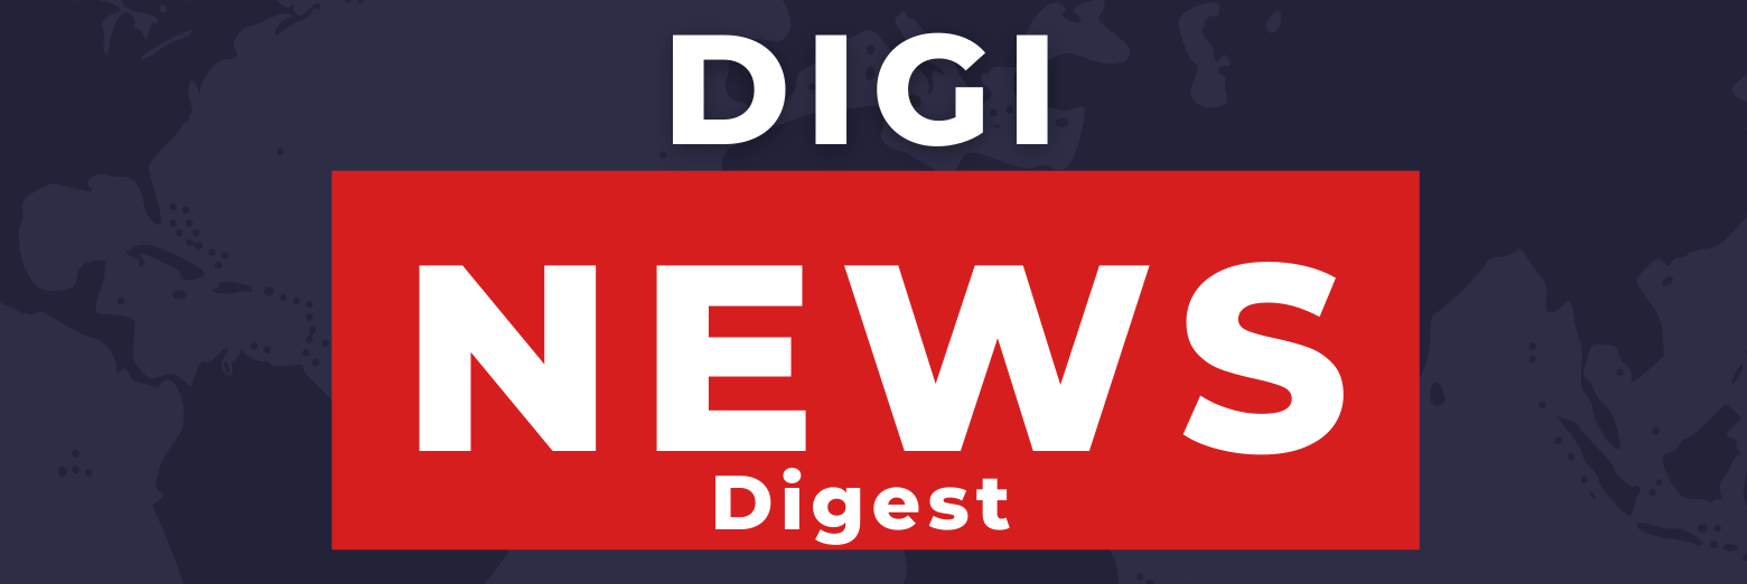 DigiNewsDigest